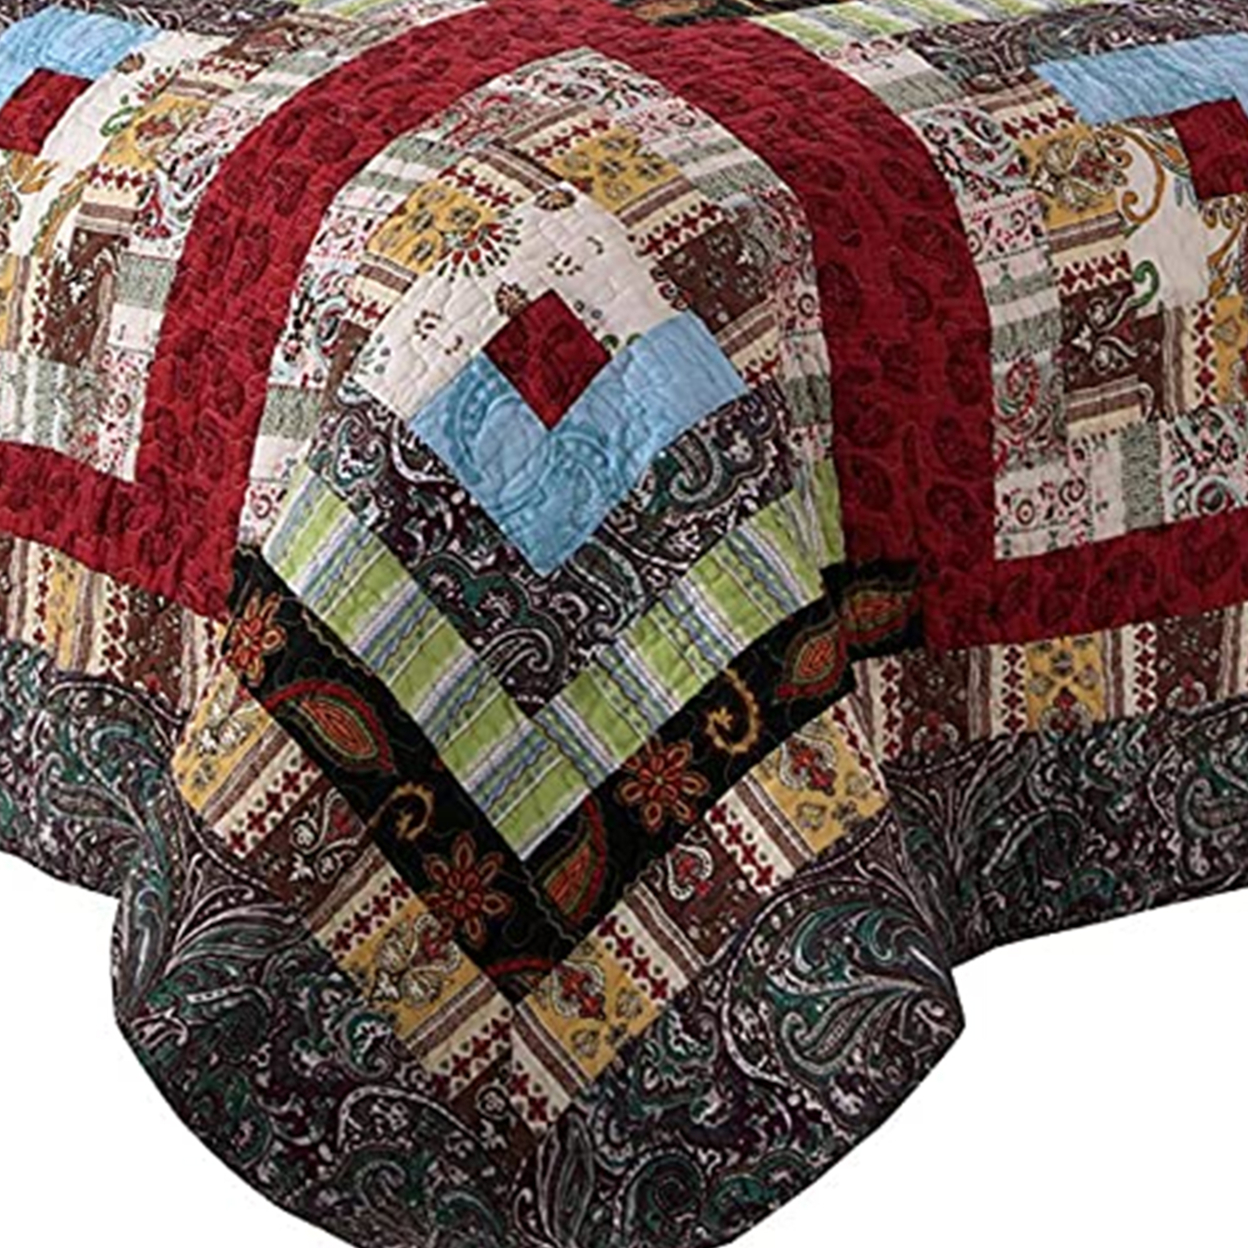 Thames 3 Piece King Size Cotton Quilt Set With Log Cabin Pattern, Multicolor- Saltoro Sherpi